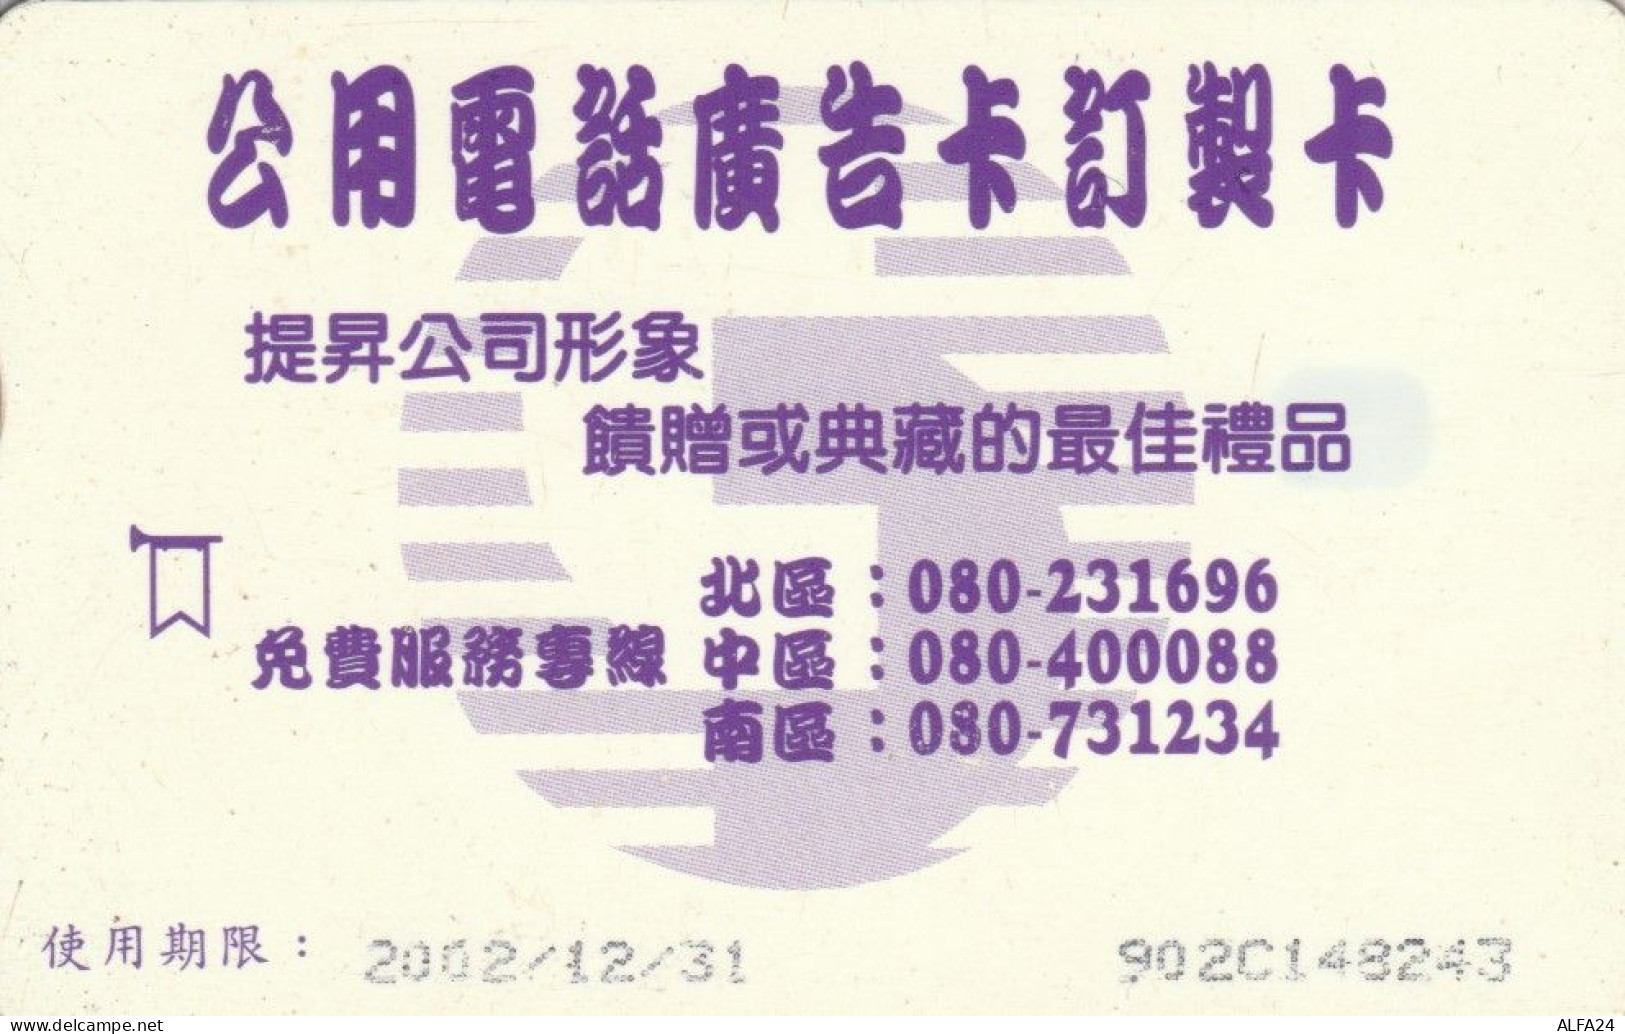 PHONE CARD TAIWAN CHIP (E79.9.7 - Taiwan (Formosa)